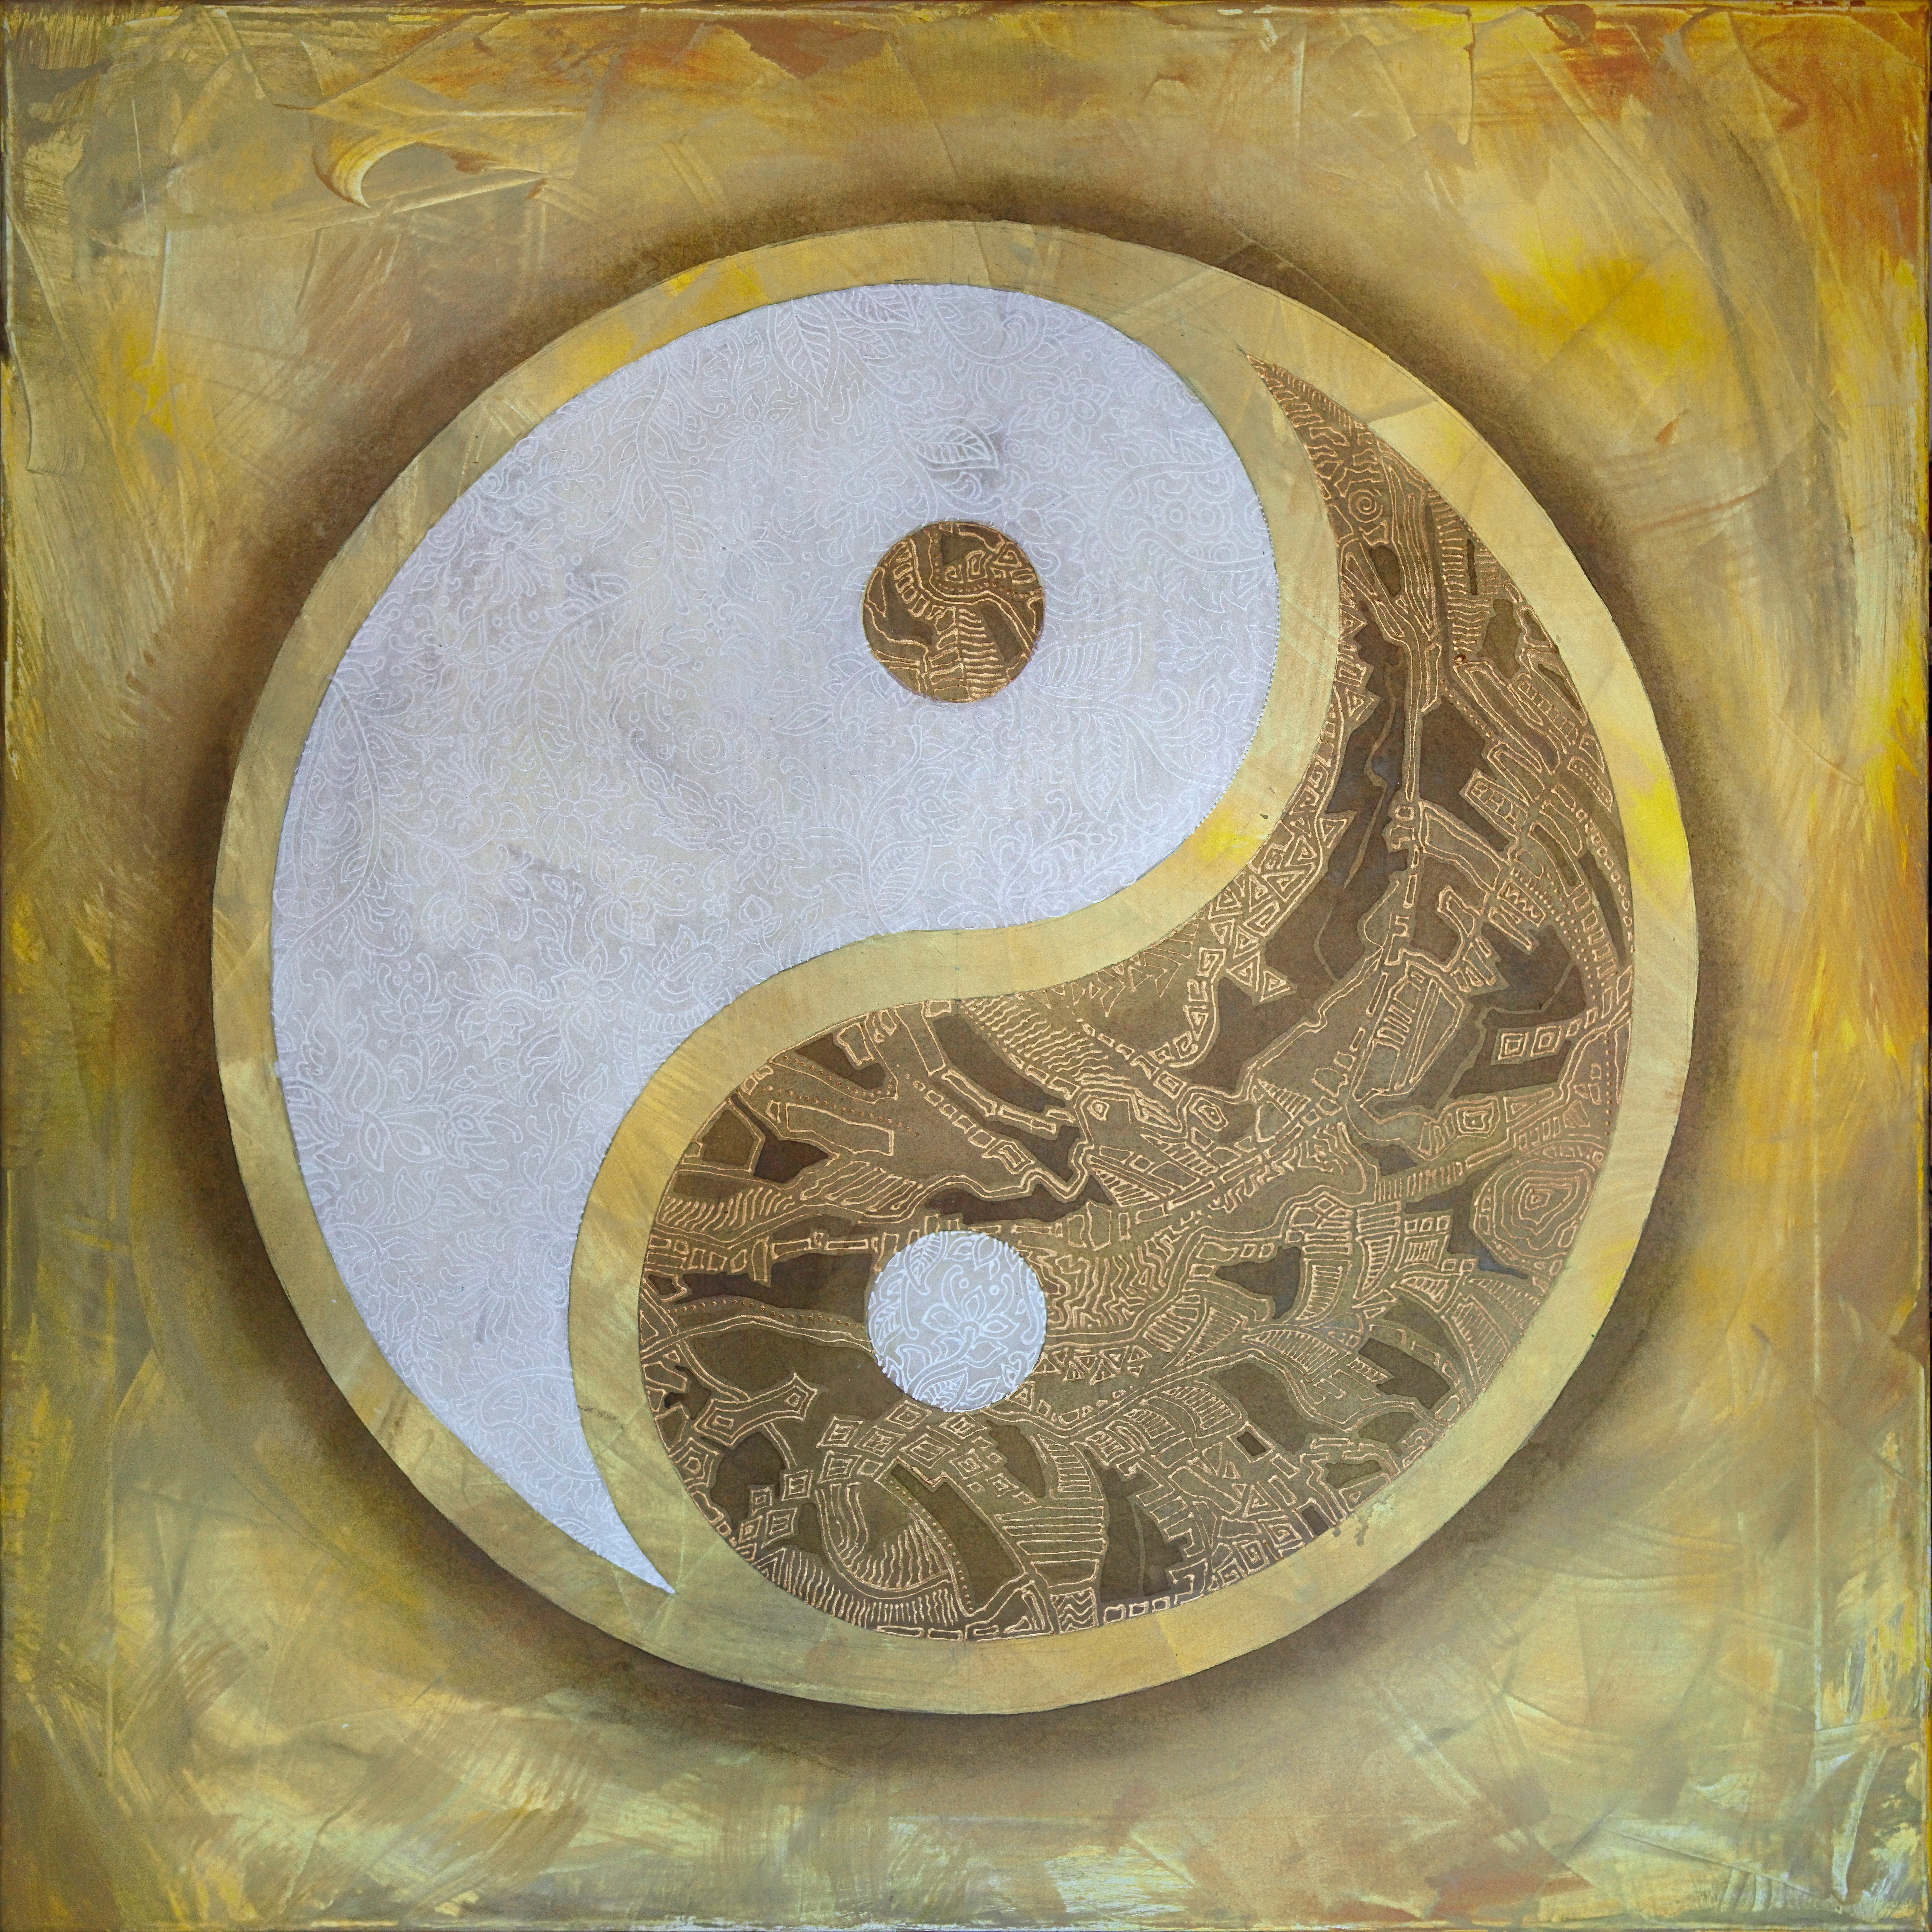 dietoterapia energética china
energias yin yang